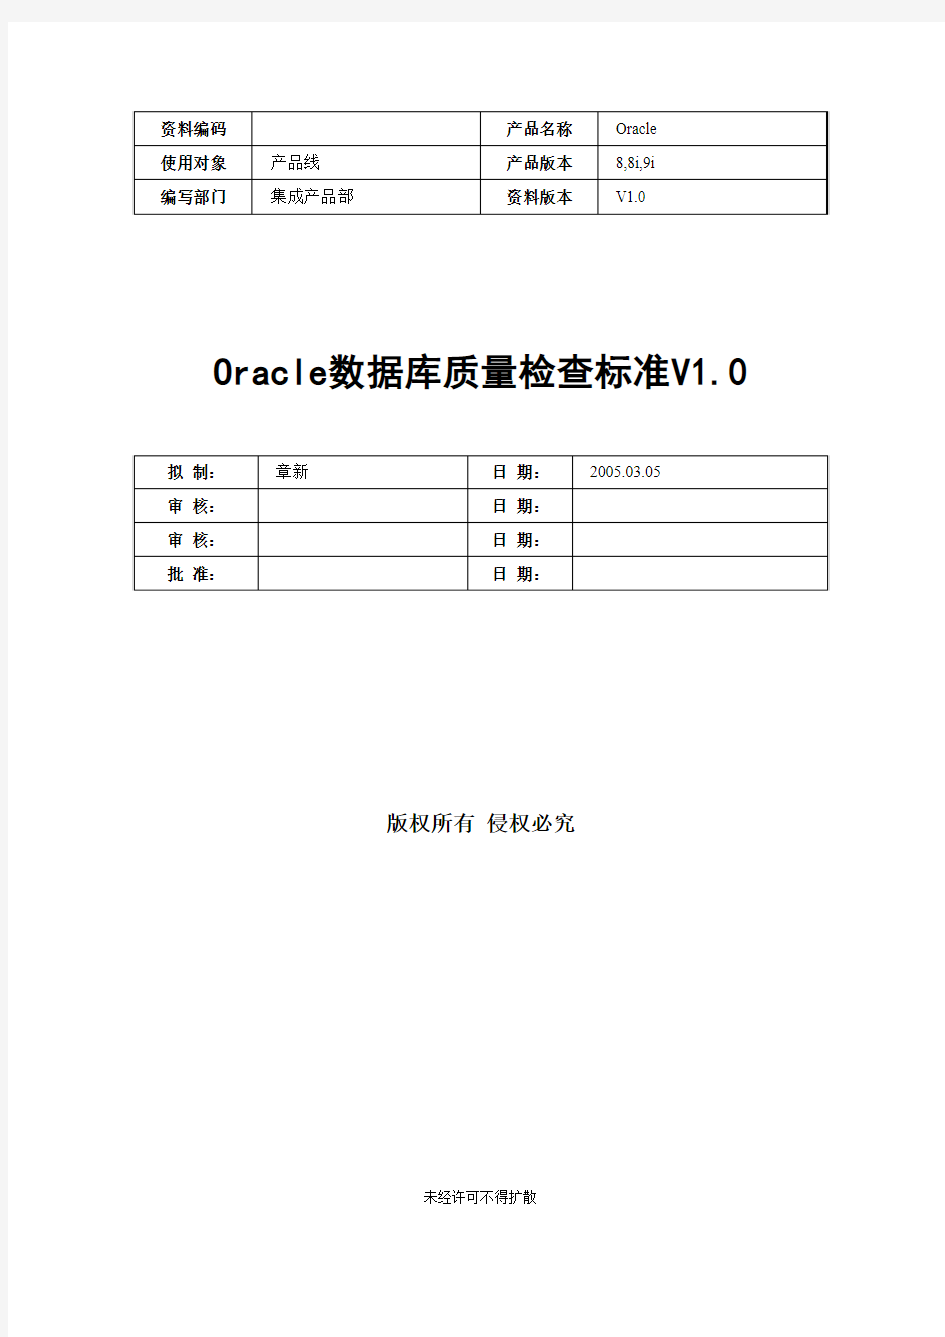 Oracle数据库质量检查标准V5.1-20050330-B